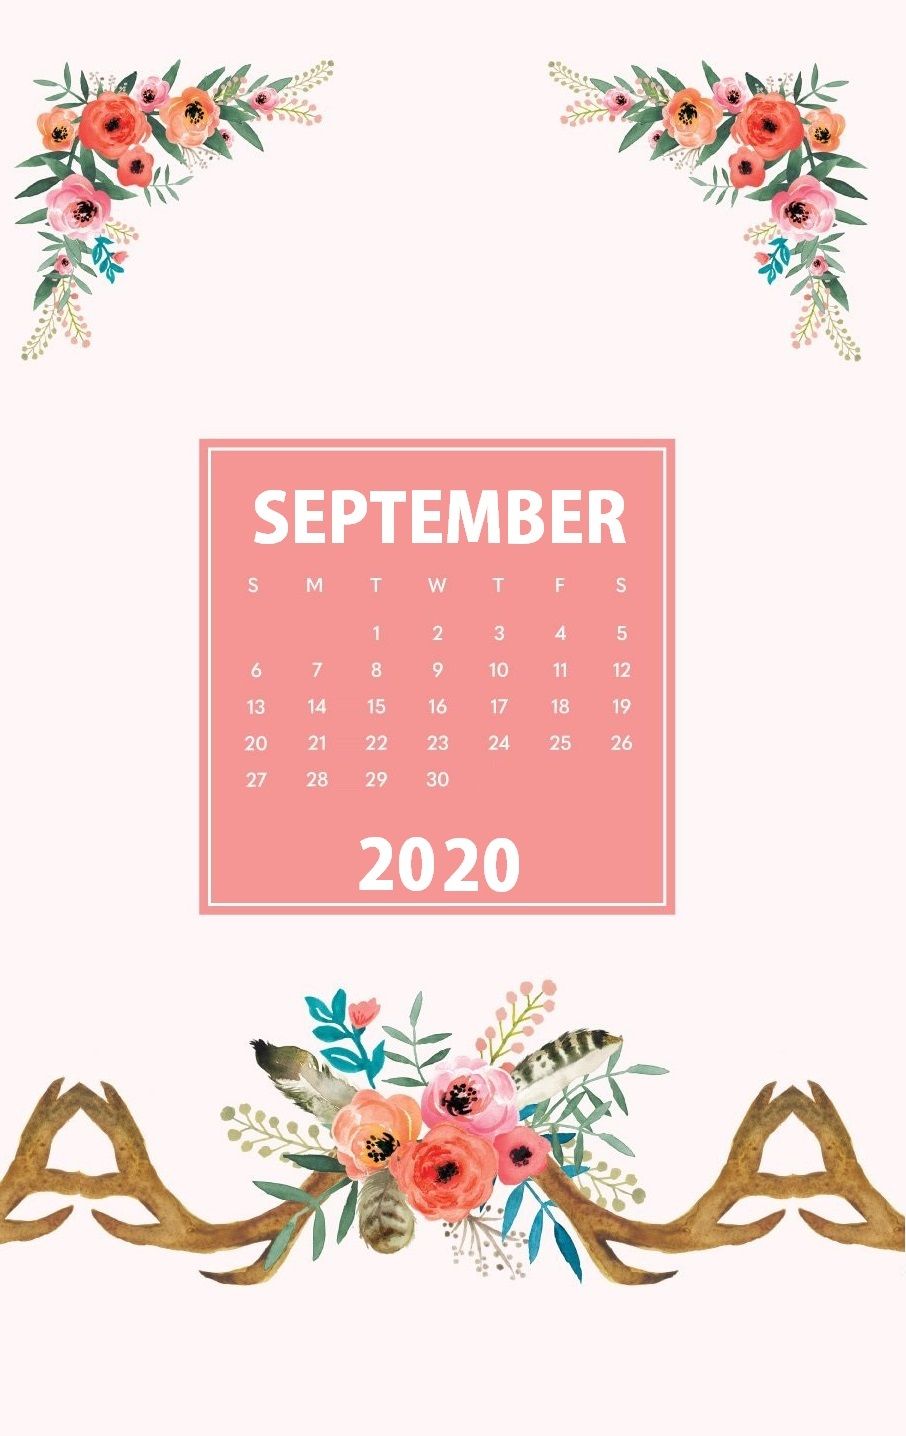 iPhone September 2020 Wallpaper